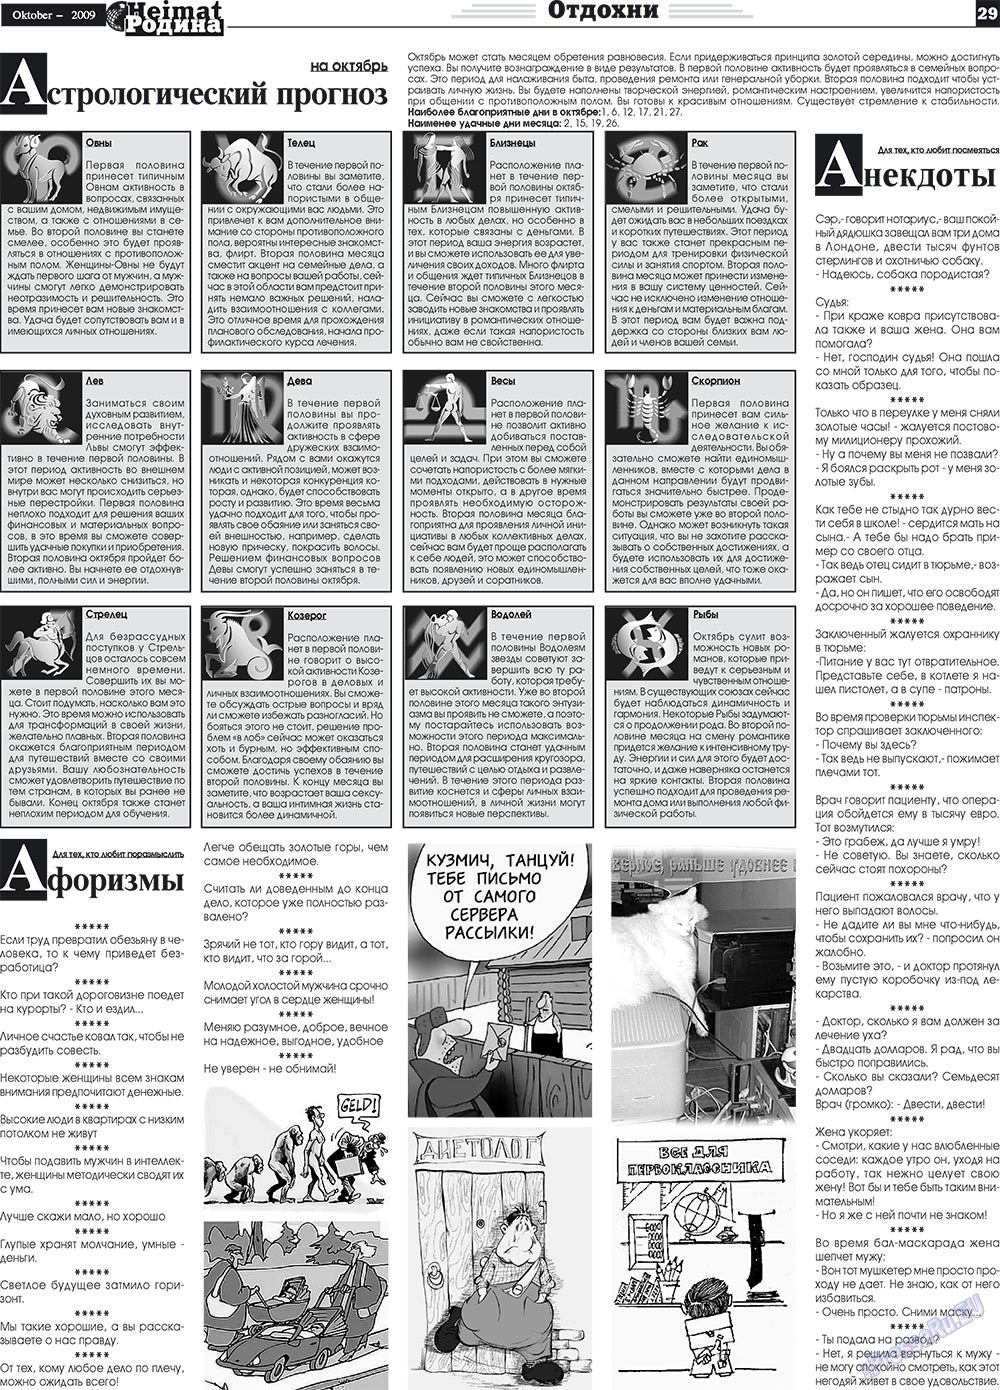 Heimat-Родина, газета. 2009 №10 стр.29